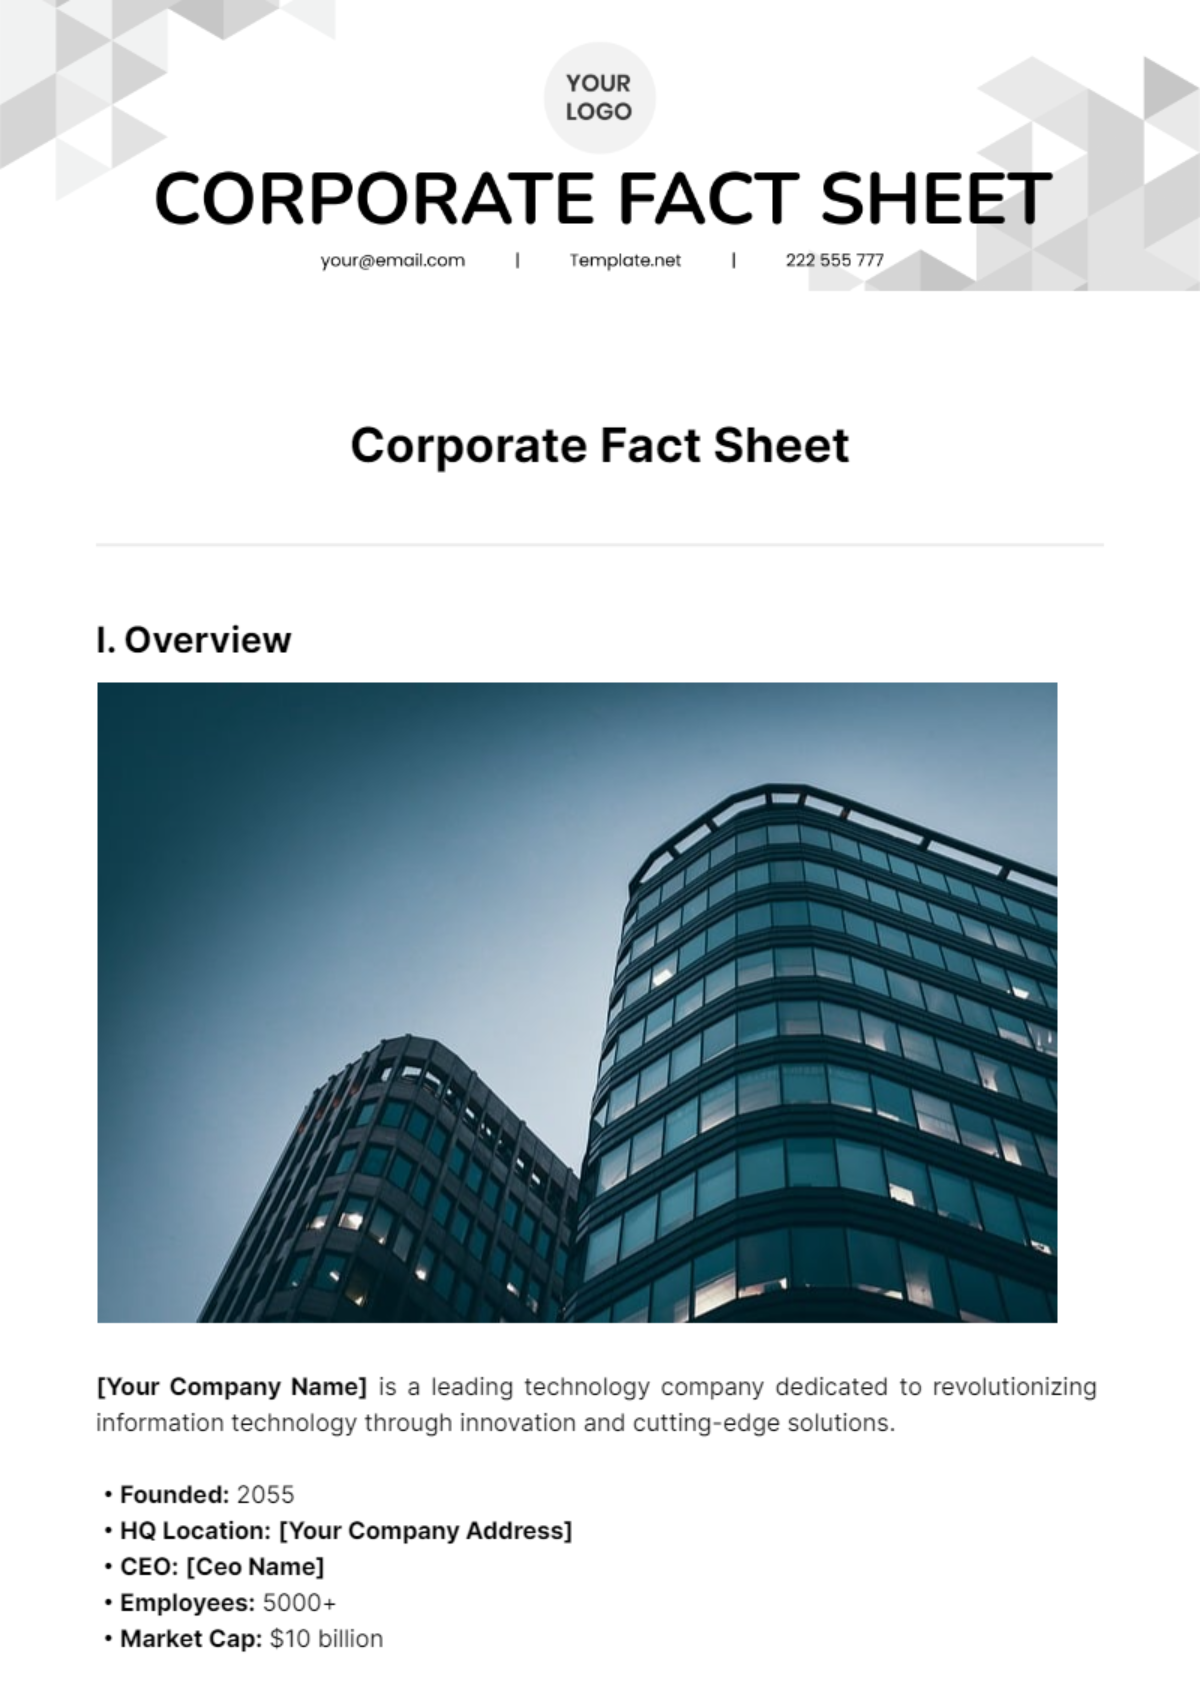 Corporate Fact Sheet Template